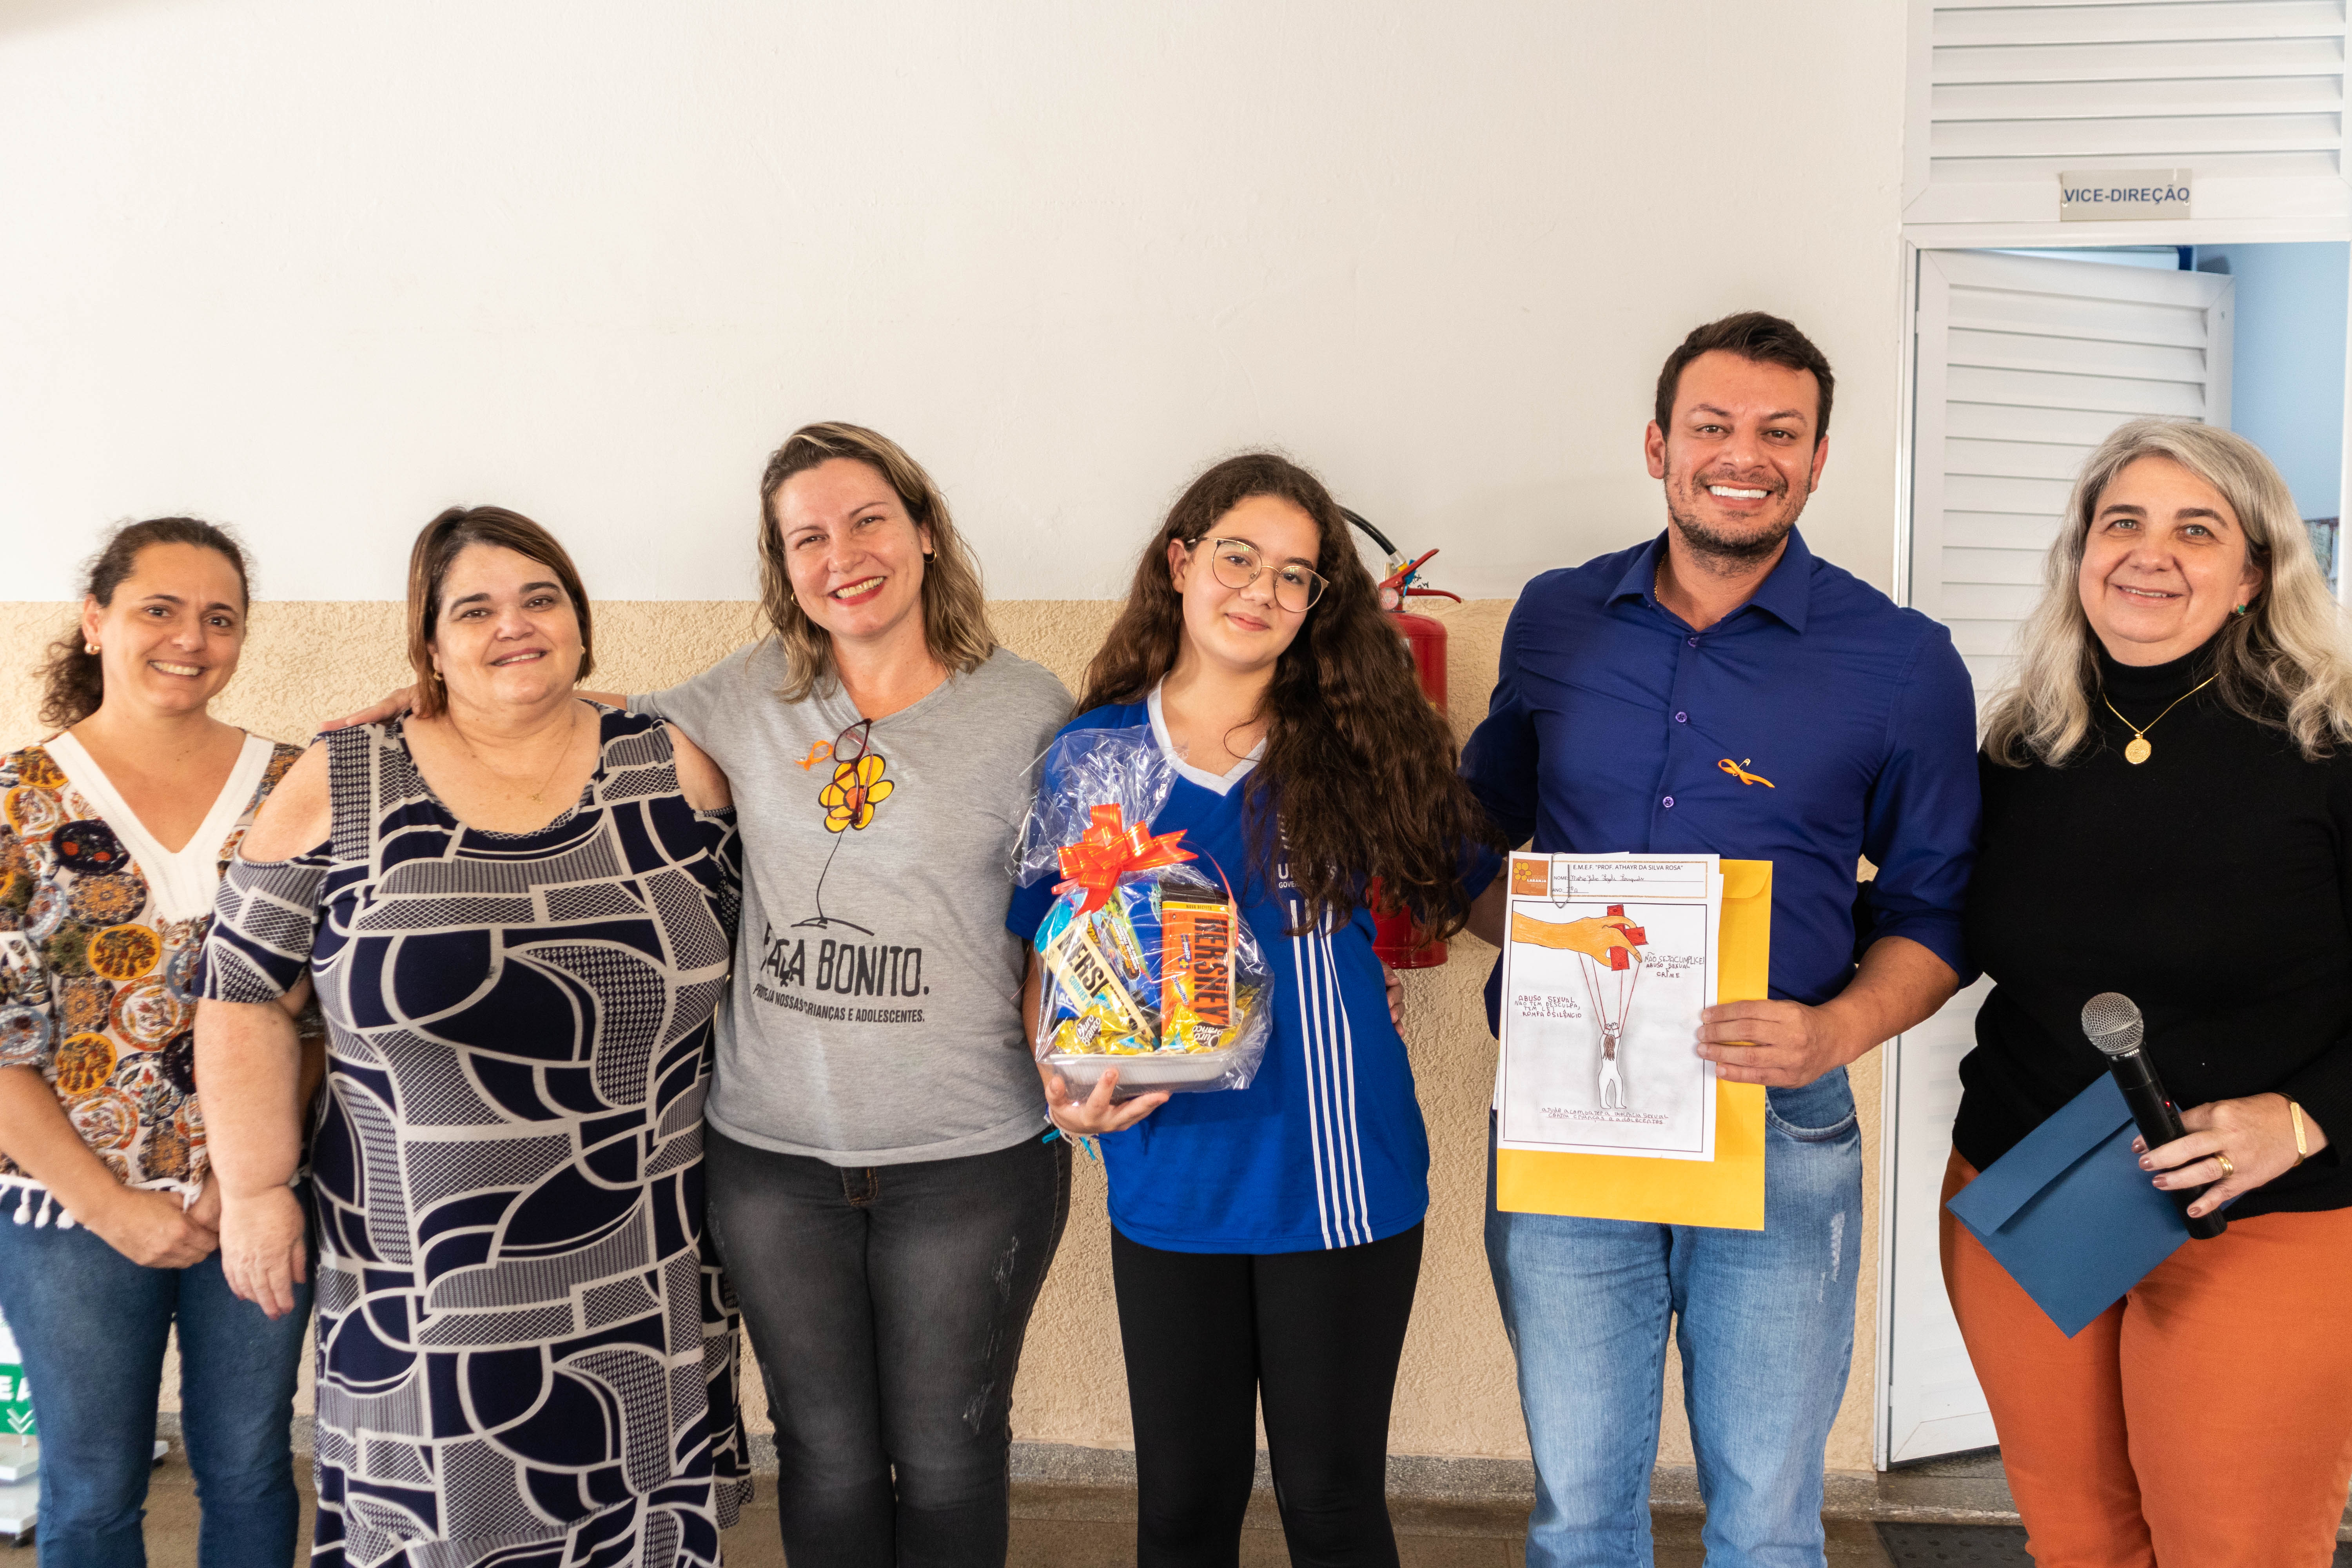 Entrega da cesta de chocolate a aluna premiada na Campanha 18 de Maio - Faça Bonito da Escola Athayr da Silva Rosa - Foto: Carina Costa 